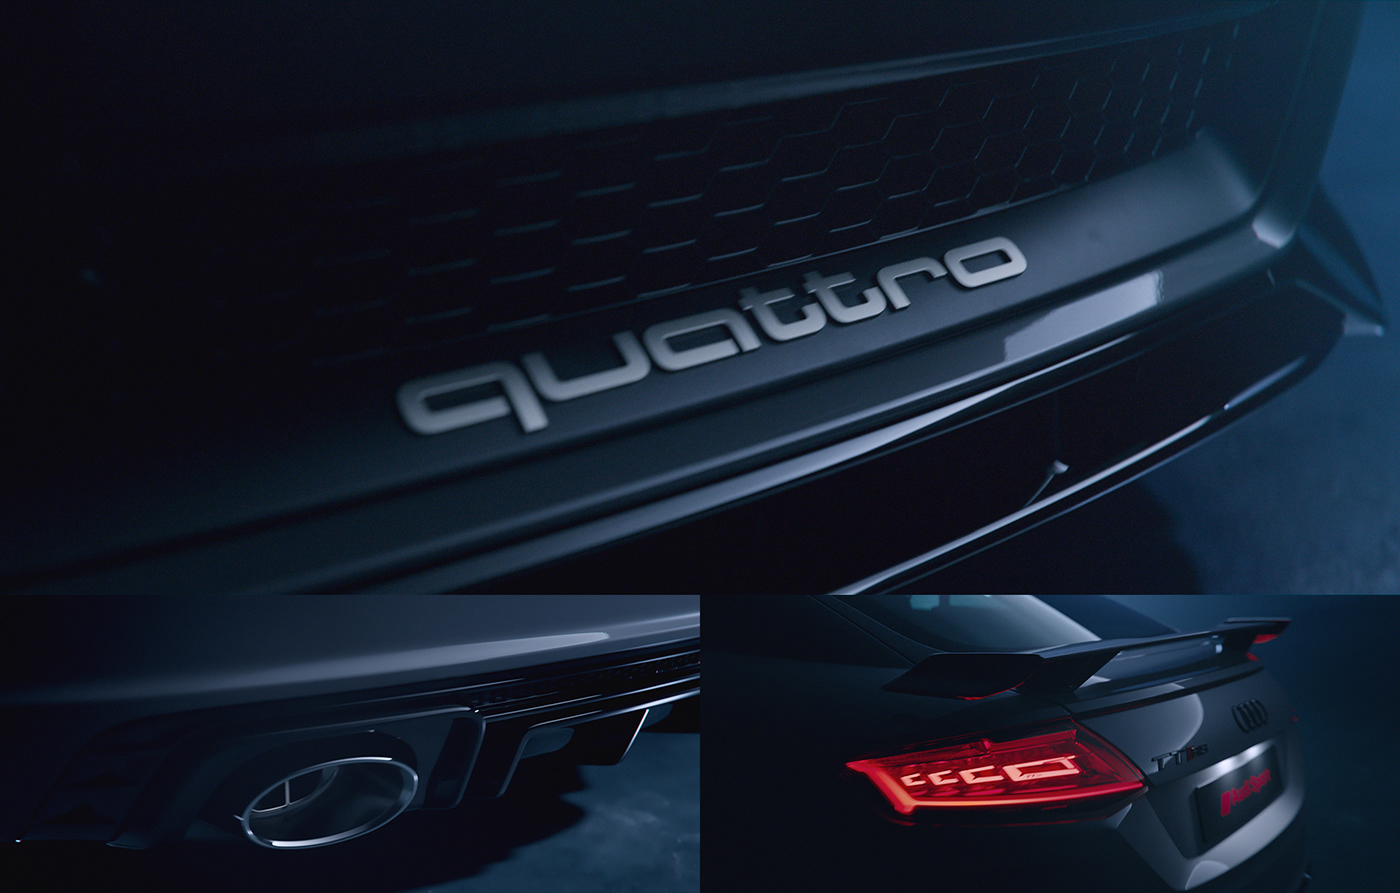 3ds max Audi automotive cgi rs teaser tt vray animation  car